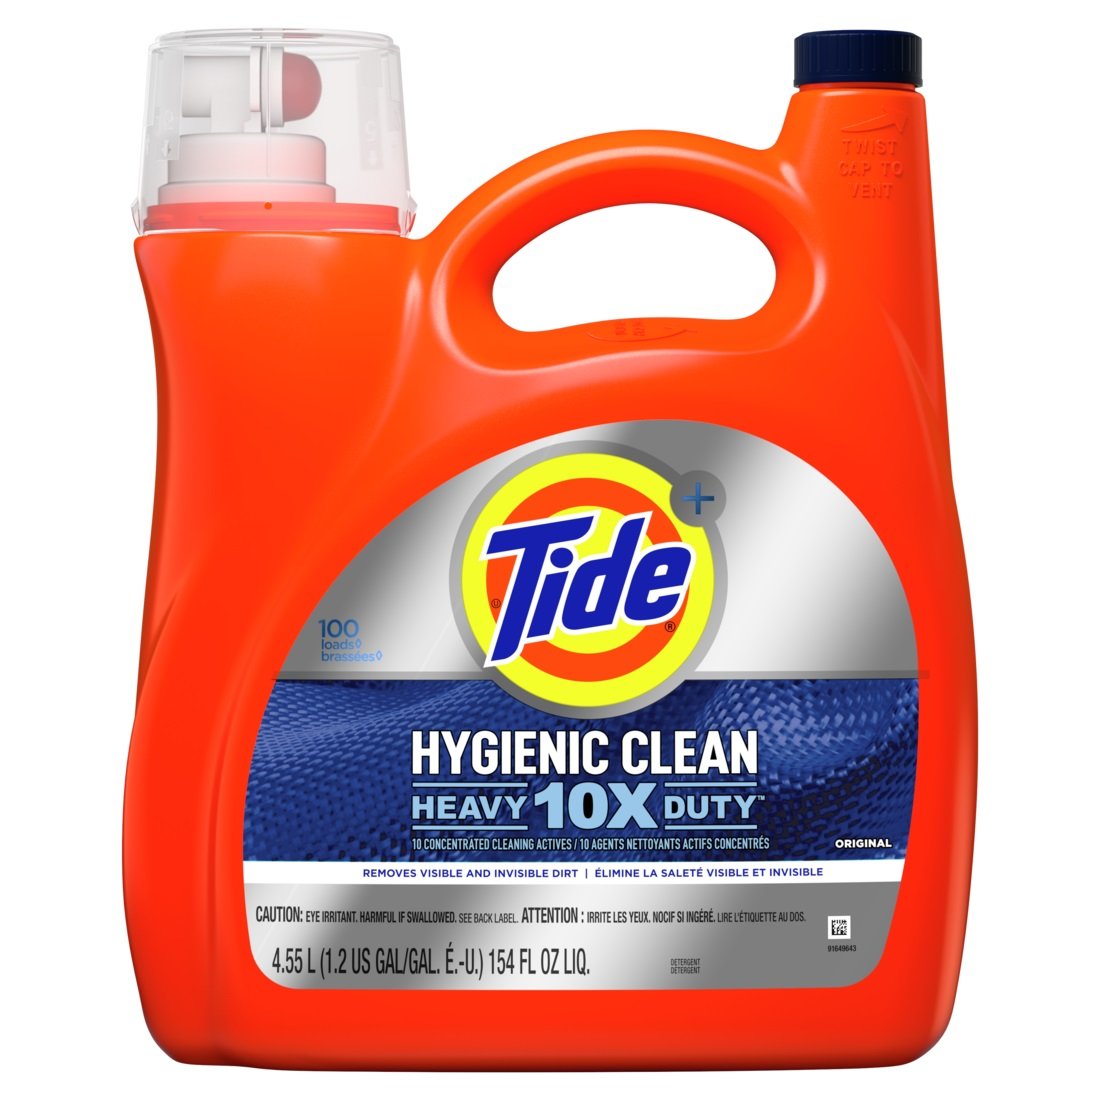 Tide - Heavy Duty Liquid Laundry Detergent 154oz, Original - Case of 4